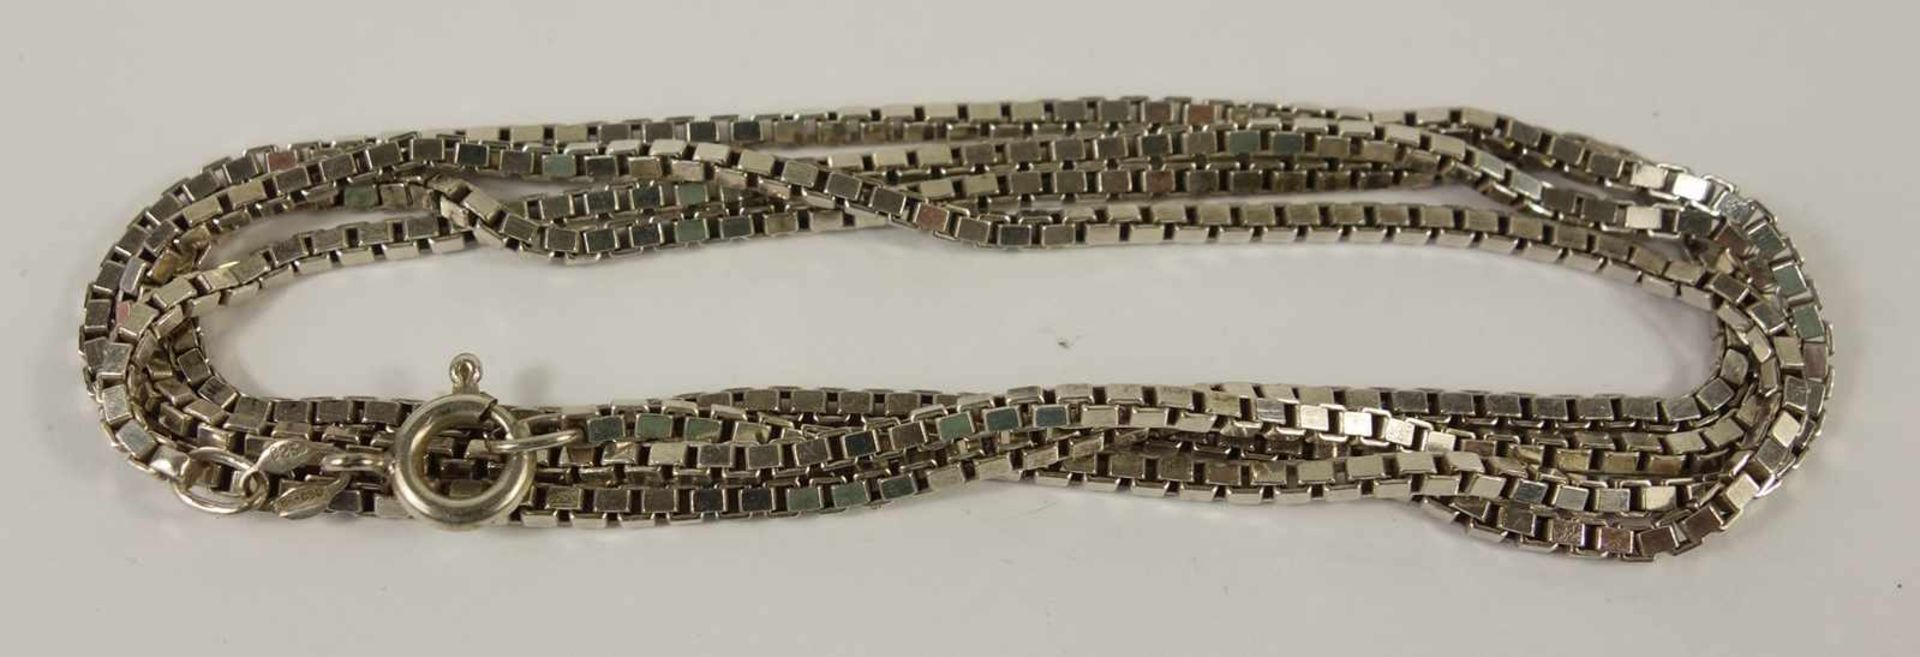 Venezianerkette, 925er Silber, Gew.17g, L.80cmVenetian necklace, 925er silver, weight 17g, L.80cm- -